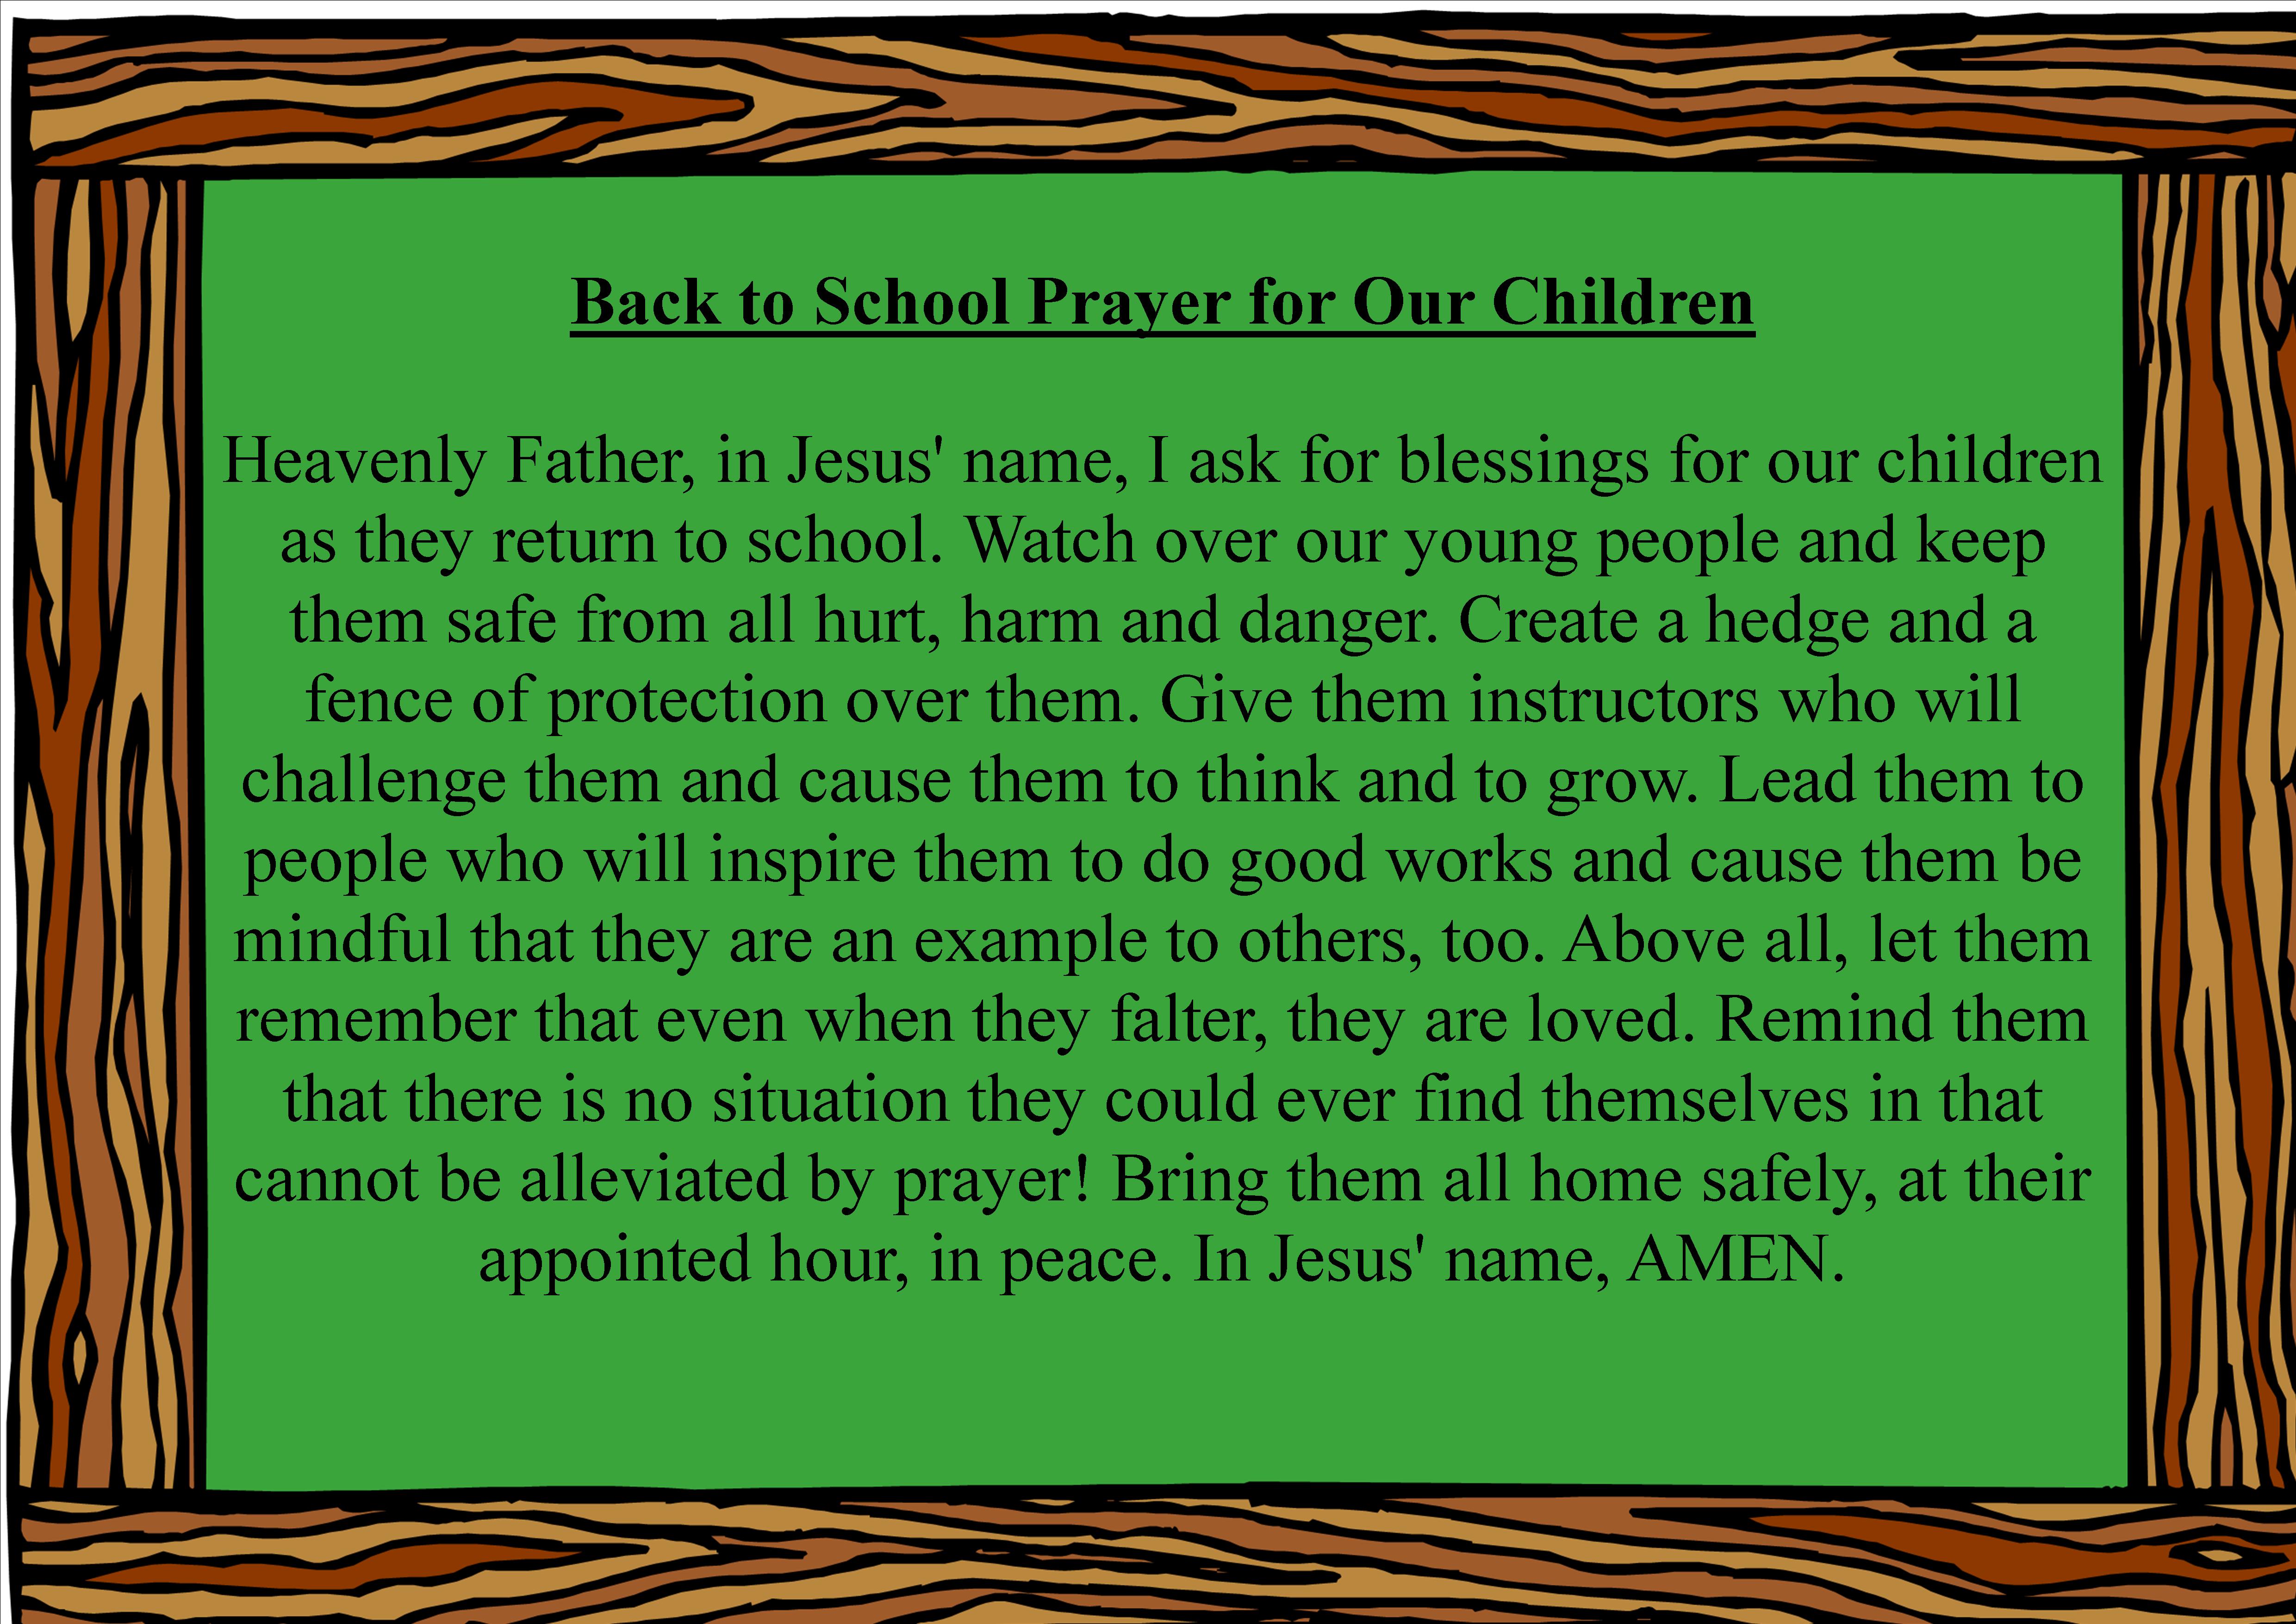 Back to school prayer